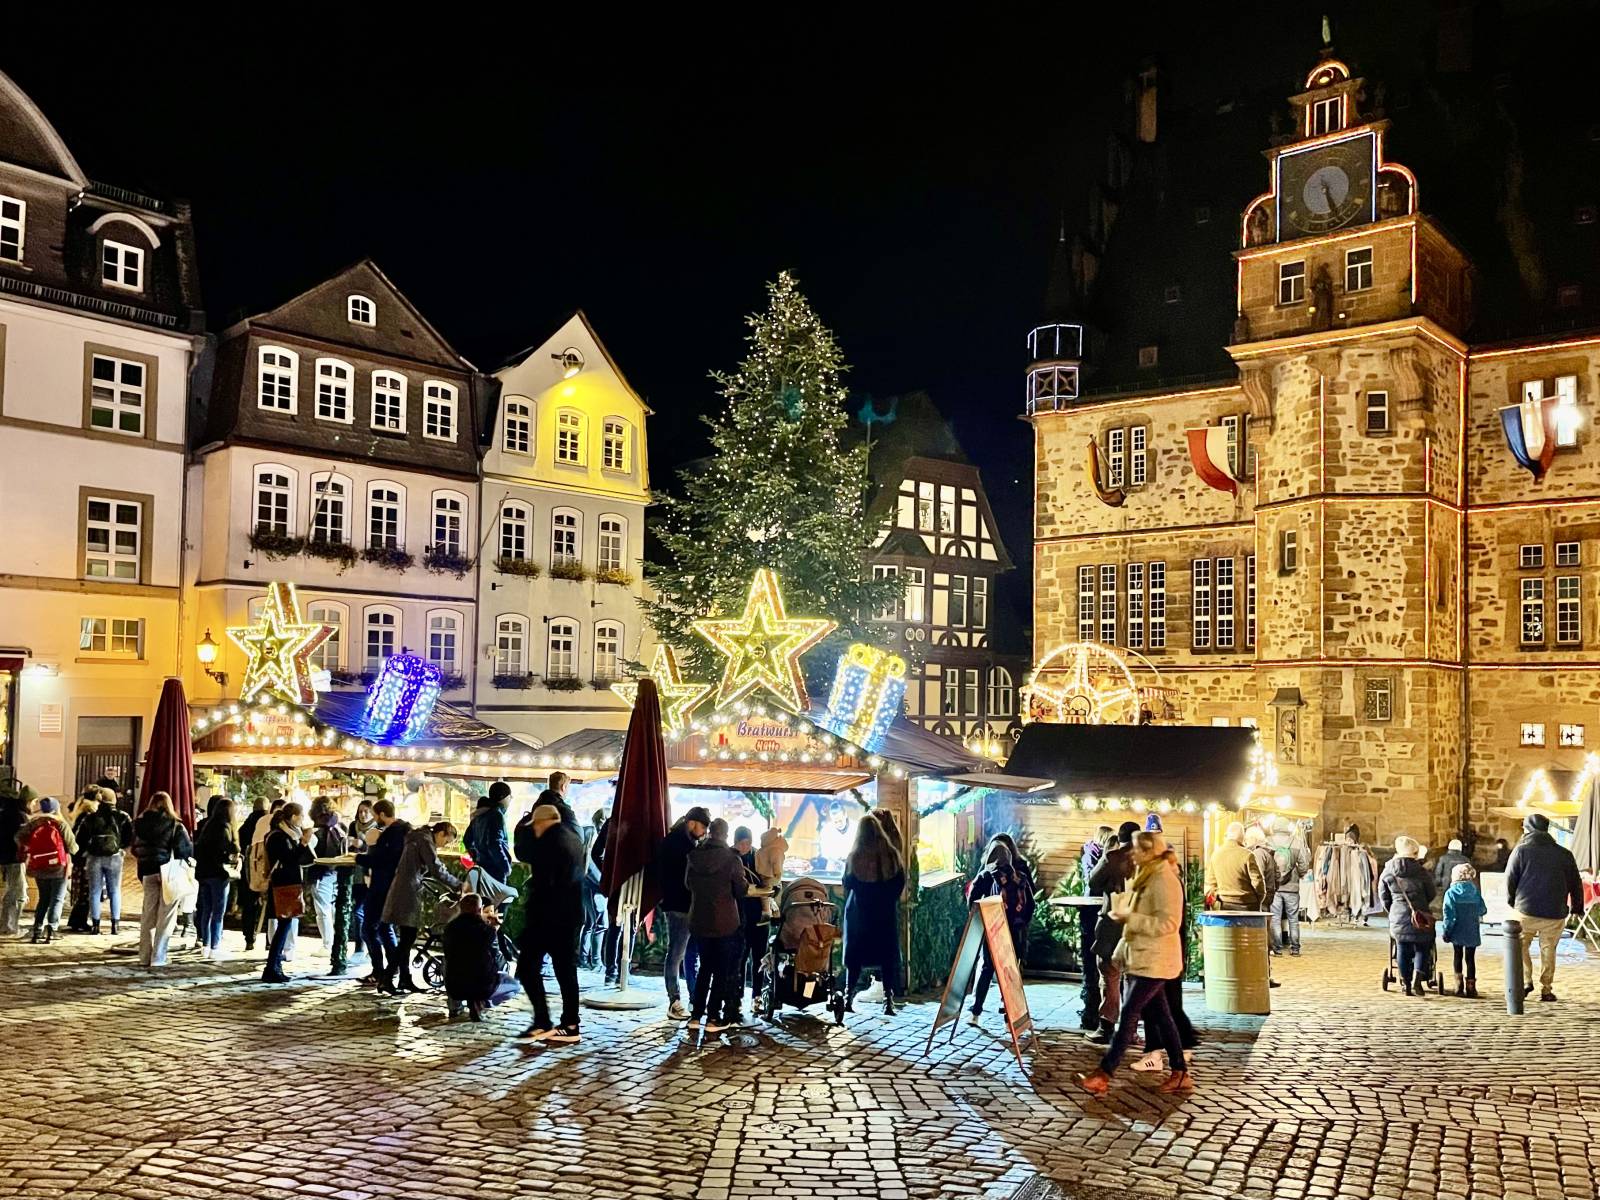 Stroll through the Marburg Christmas market